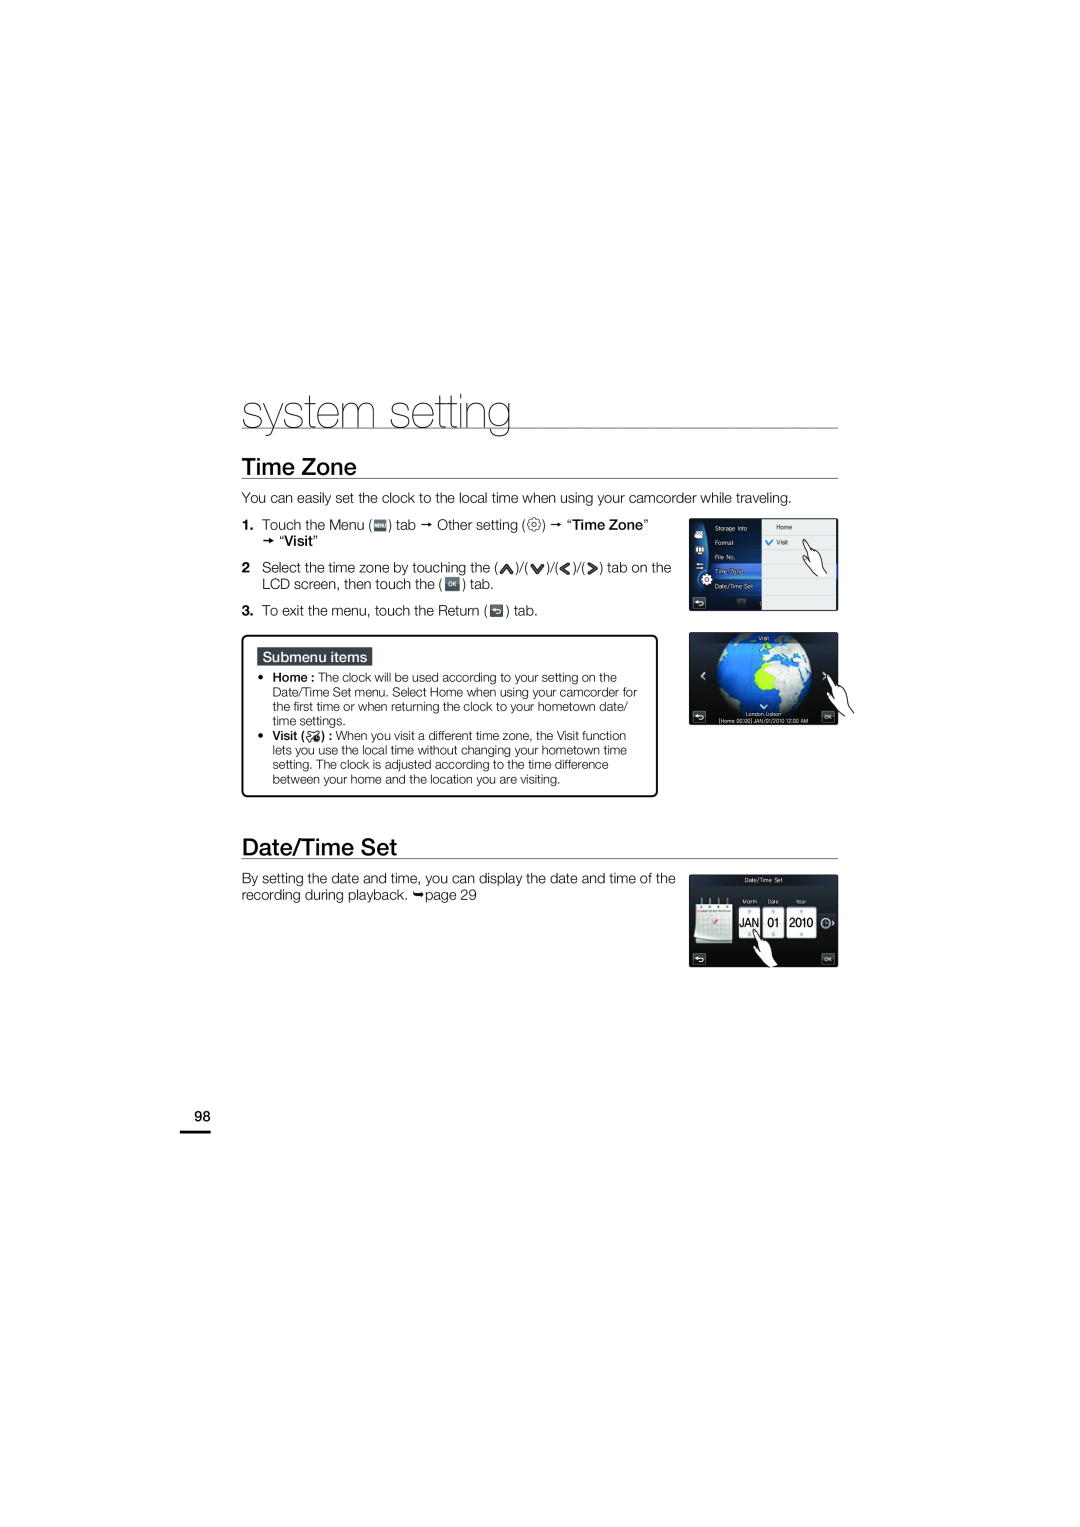 Samsung HMX-S15BN/XAA, HMX-S10BN/XAA manual Time Zone, Date/Time Set, system setting, Submenu items 